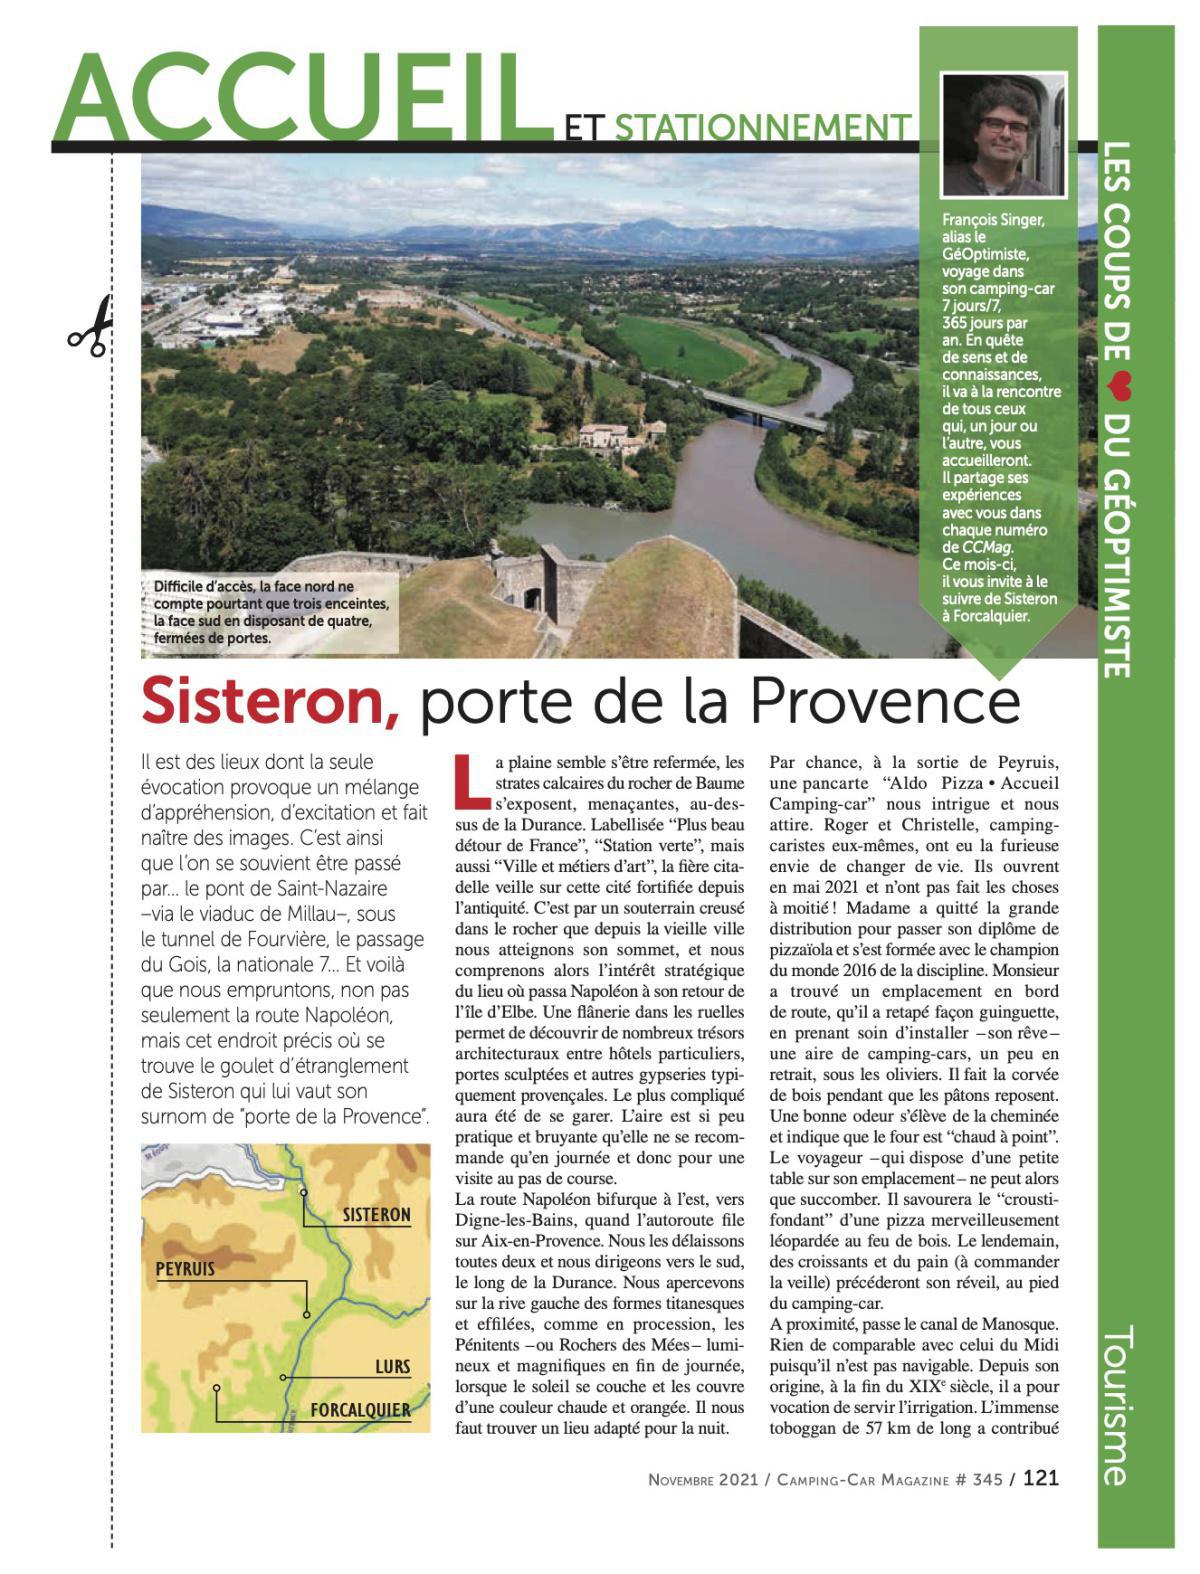 Sisteron, porte de la Provence - CCM345